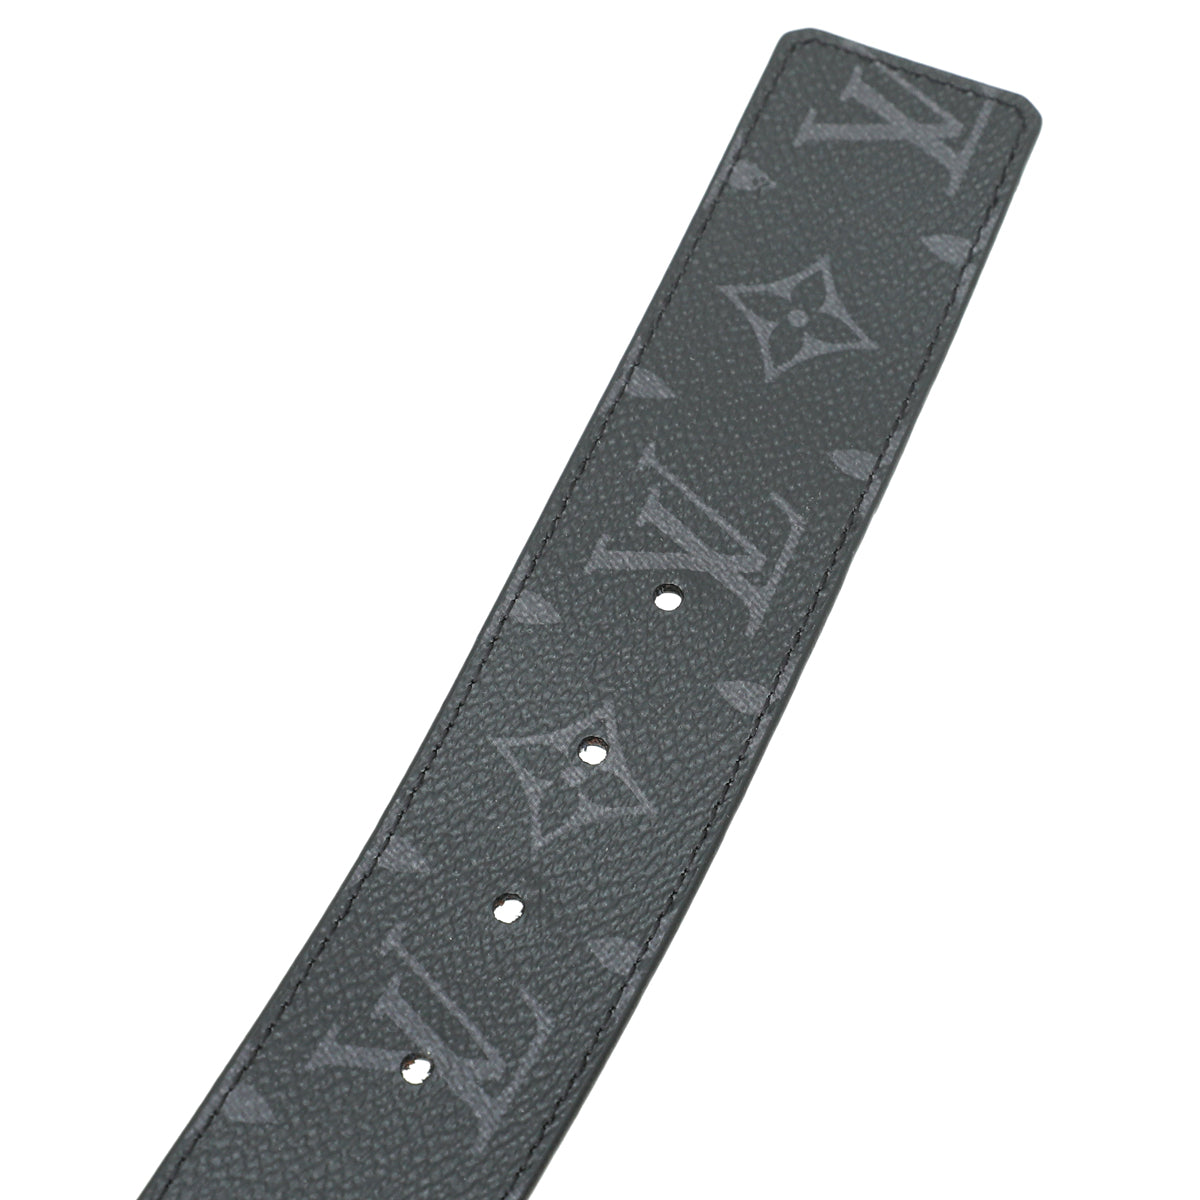 Louis Vuitton Reversible Monogram graphite belt - DesignerSupplier